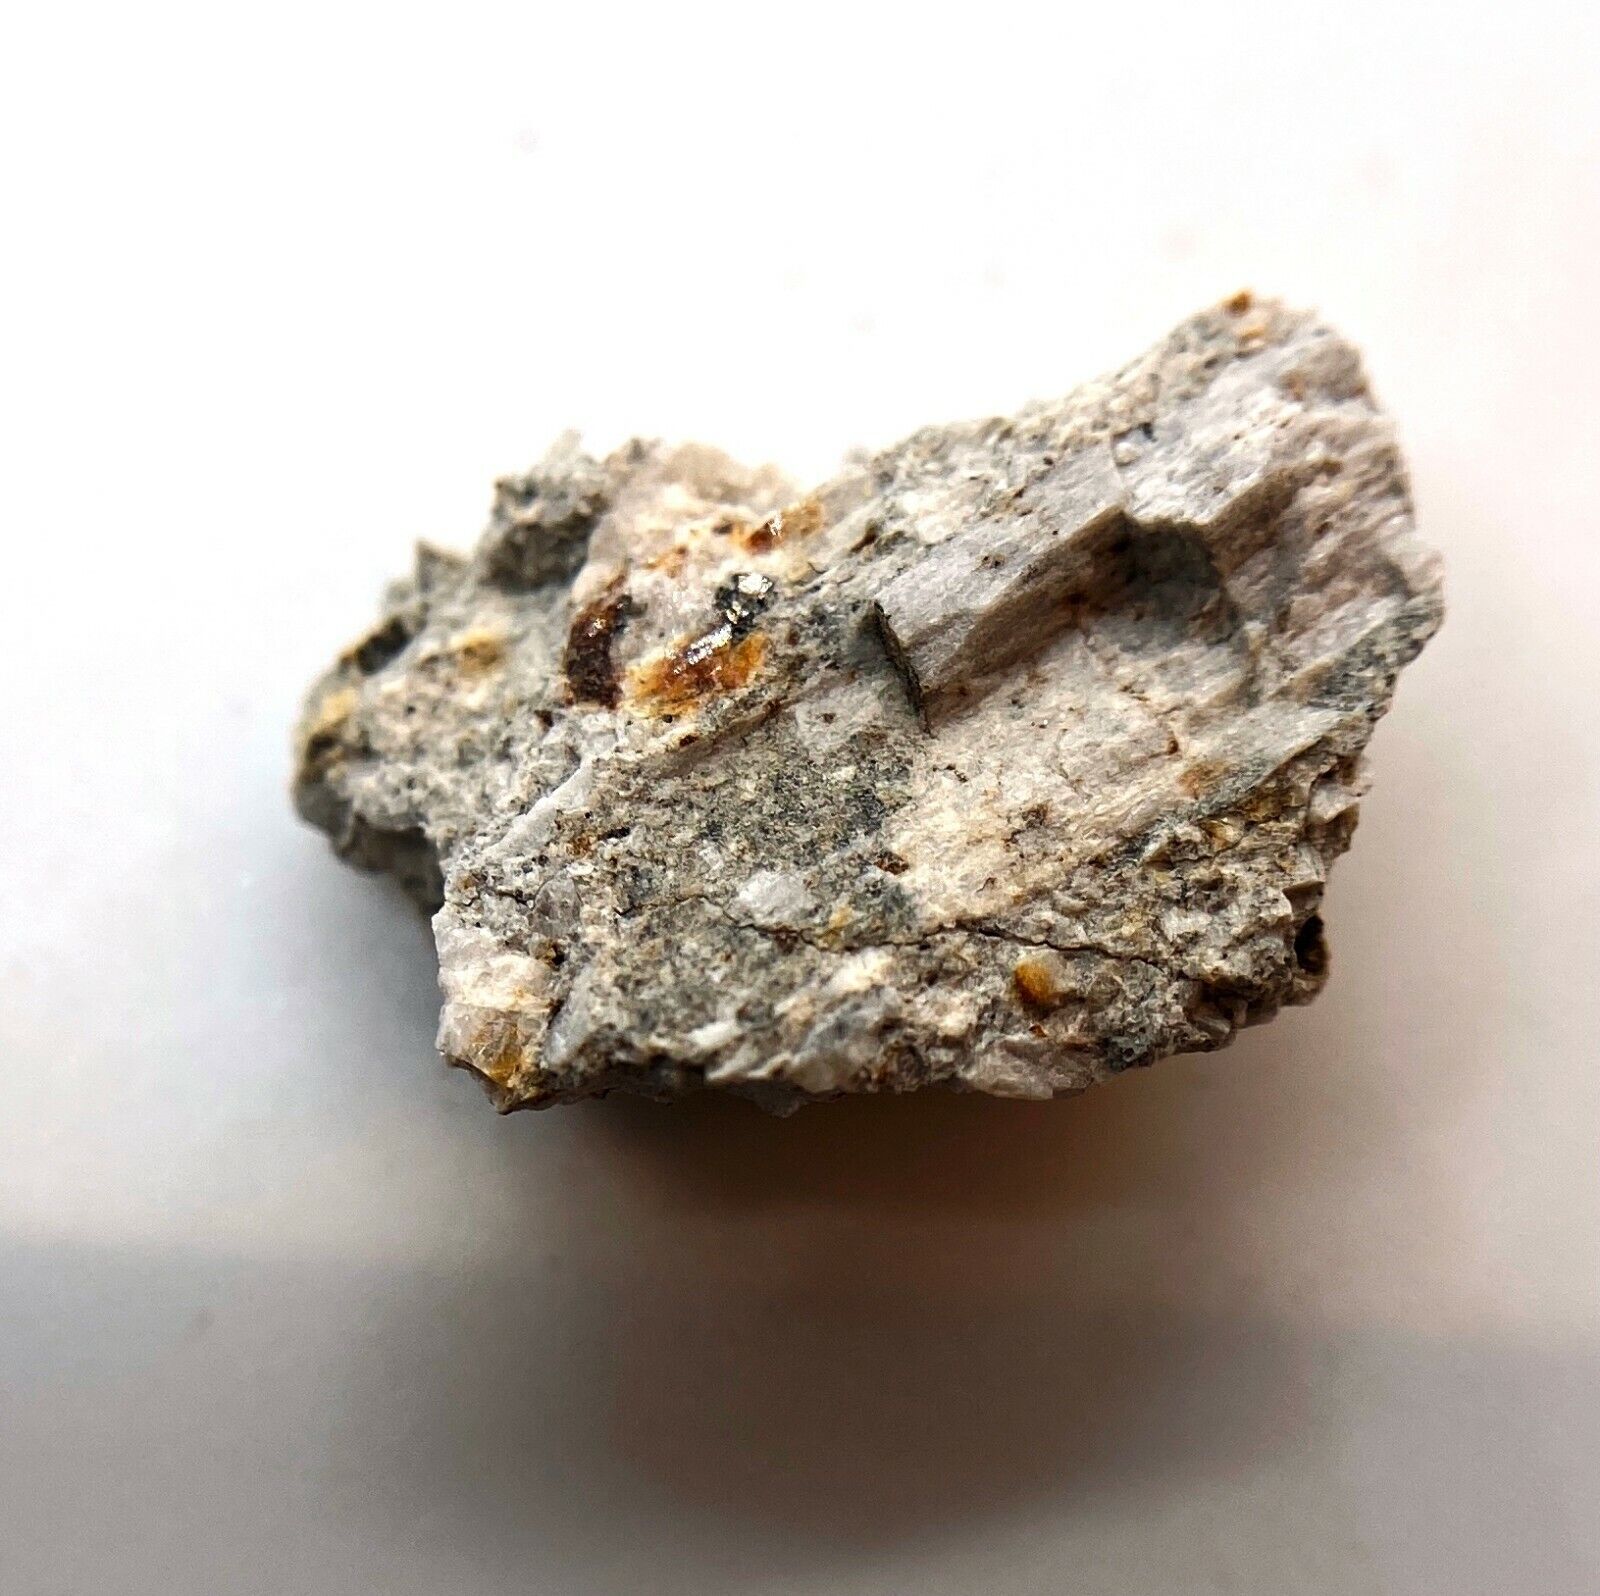 2.02 gram Norton County aubrite meteorite - Kansas fall 